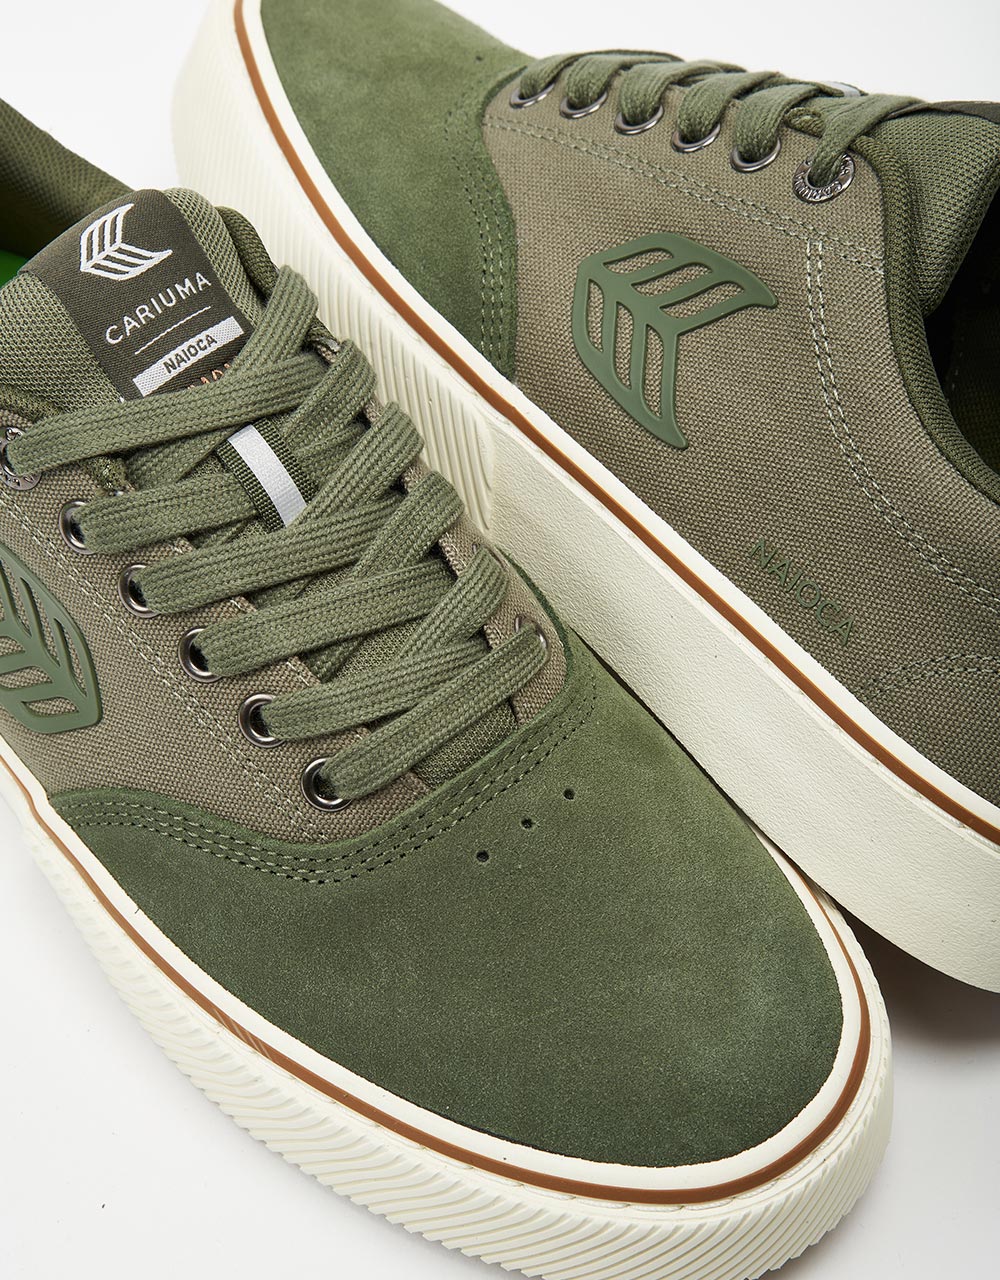 Cariuma Naioca Pro Skate Shoes - Olive Green/Green